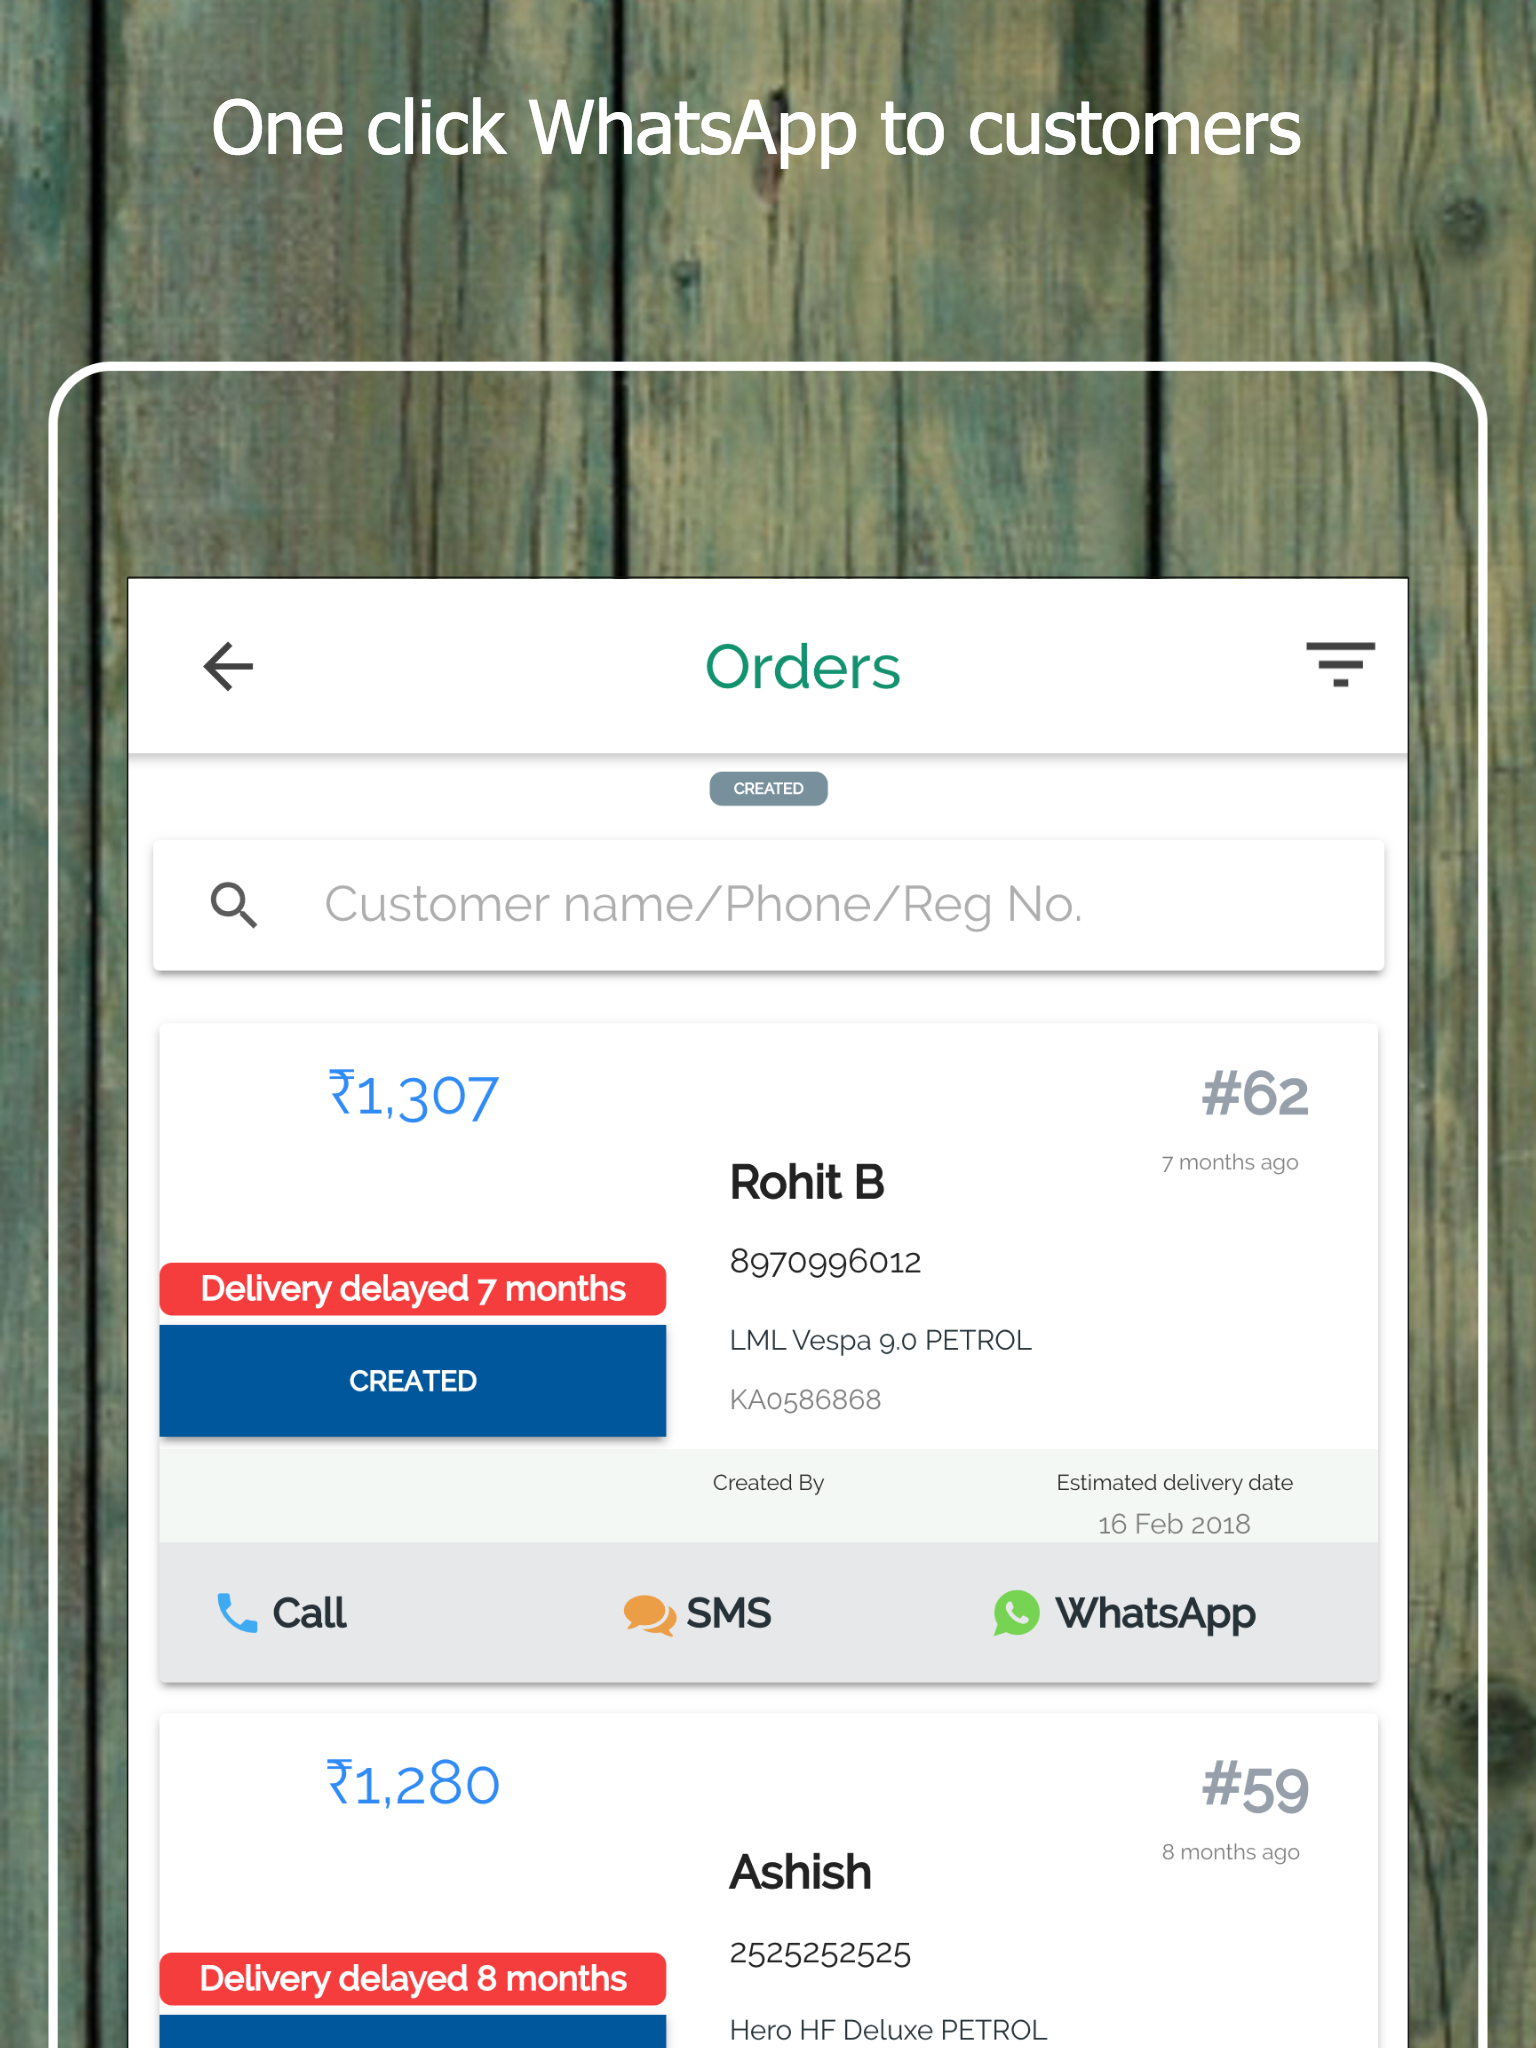 GaragePlug Software - One click WhatsApp option to customers